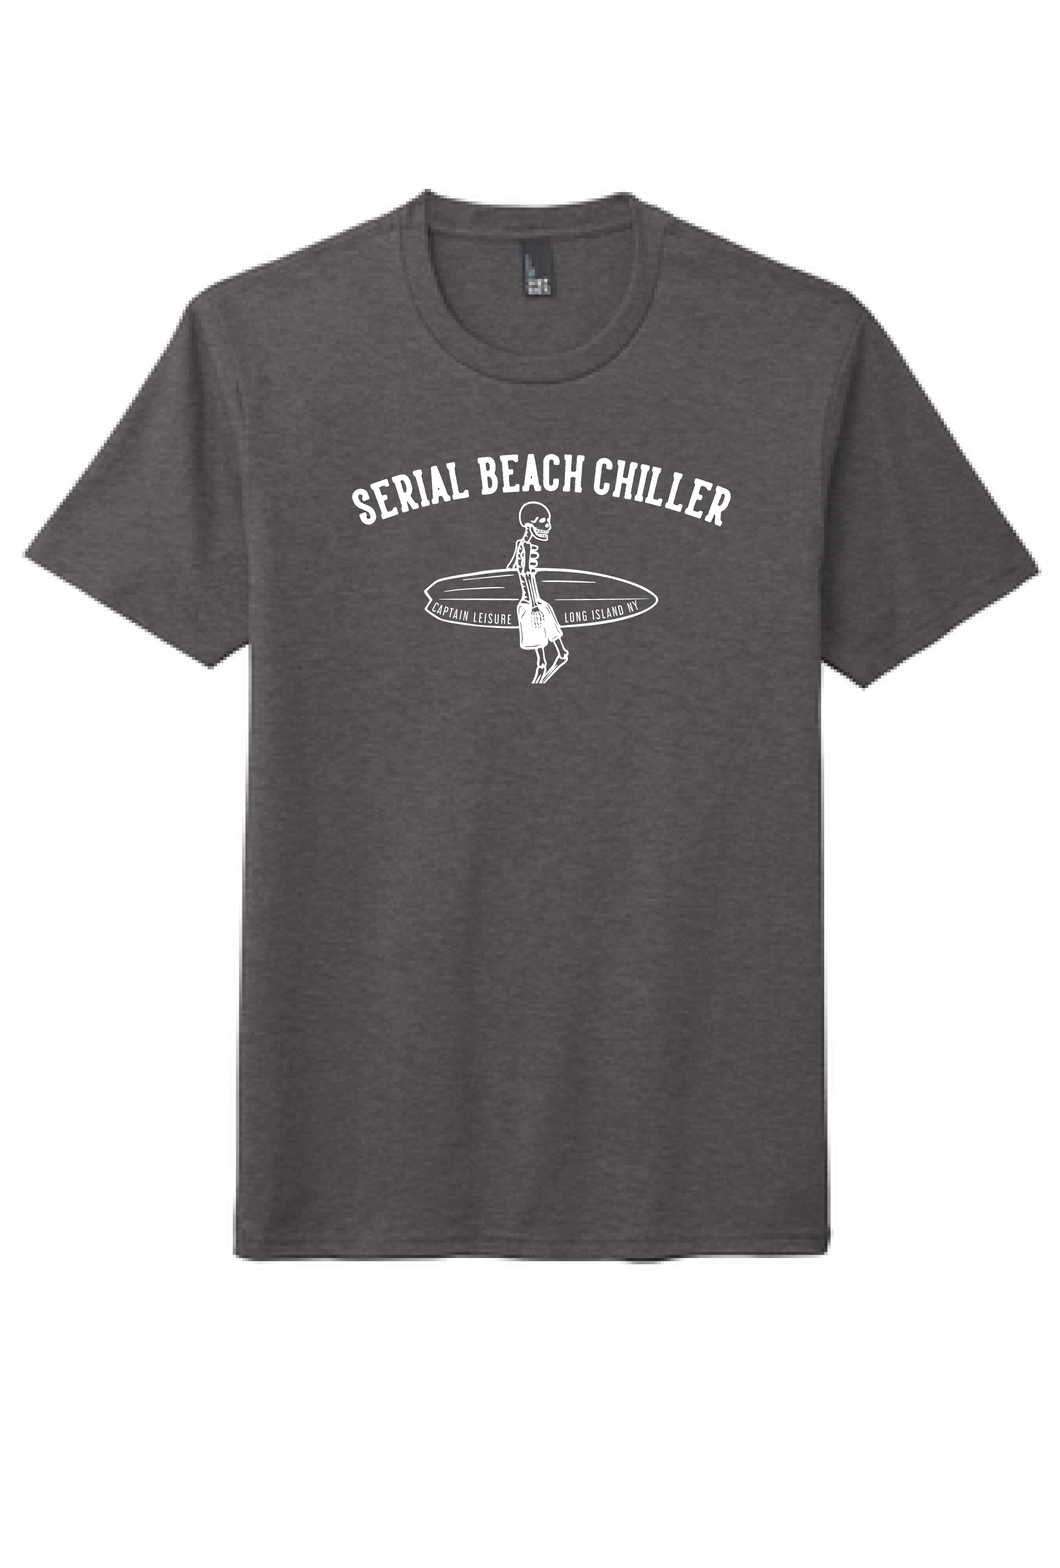 SALE: Serial Beach Chiller Unisex Tee - Gray